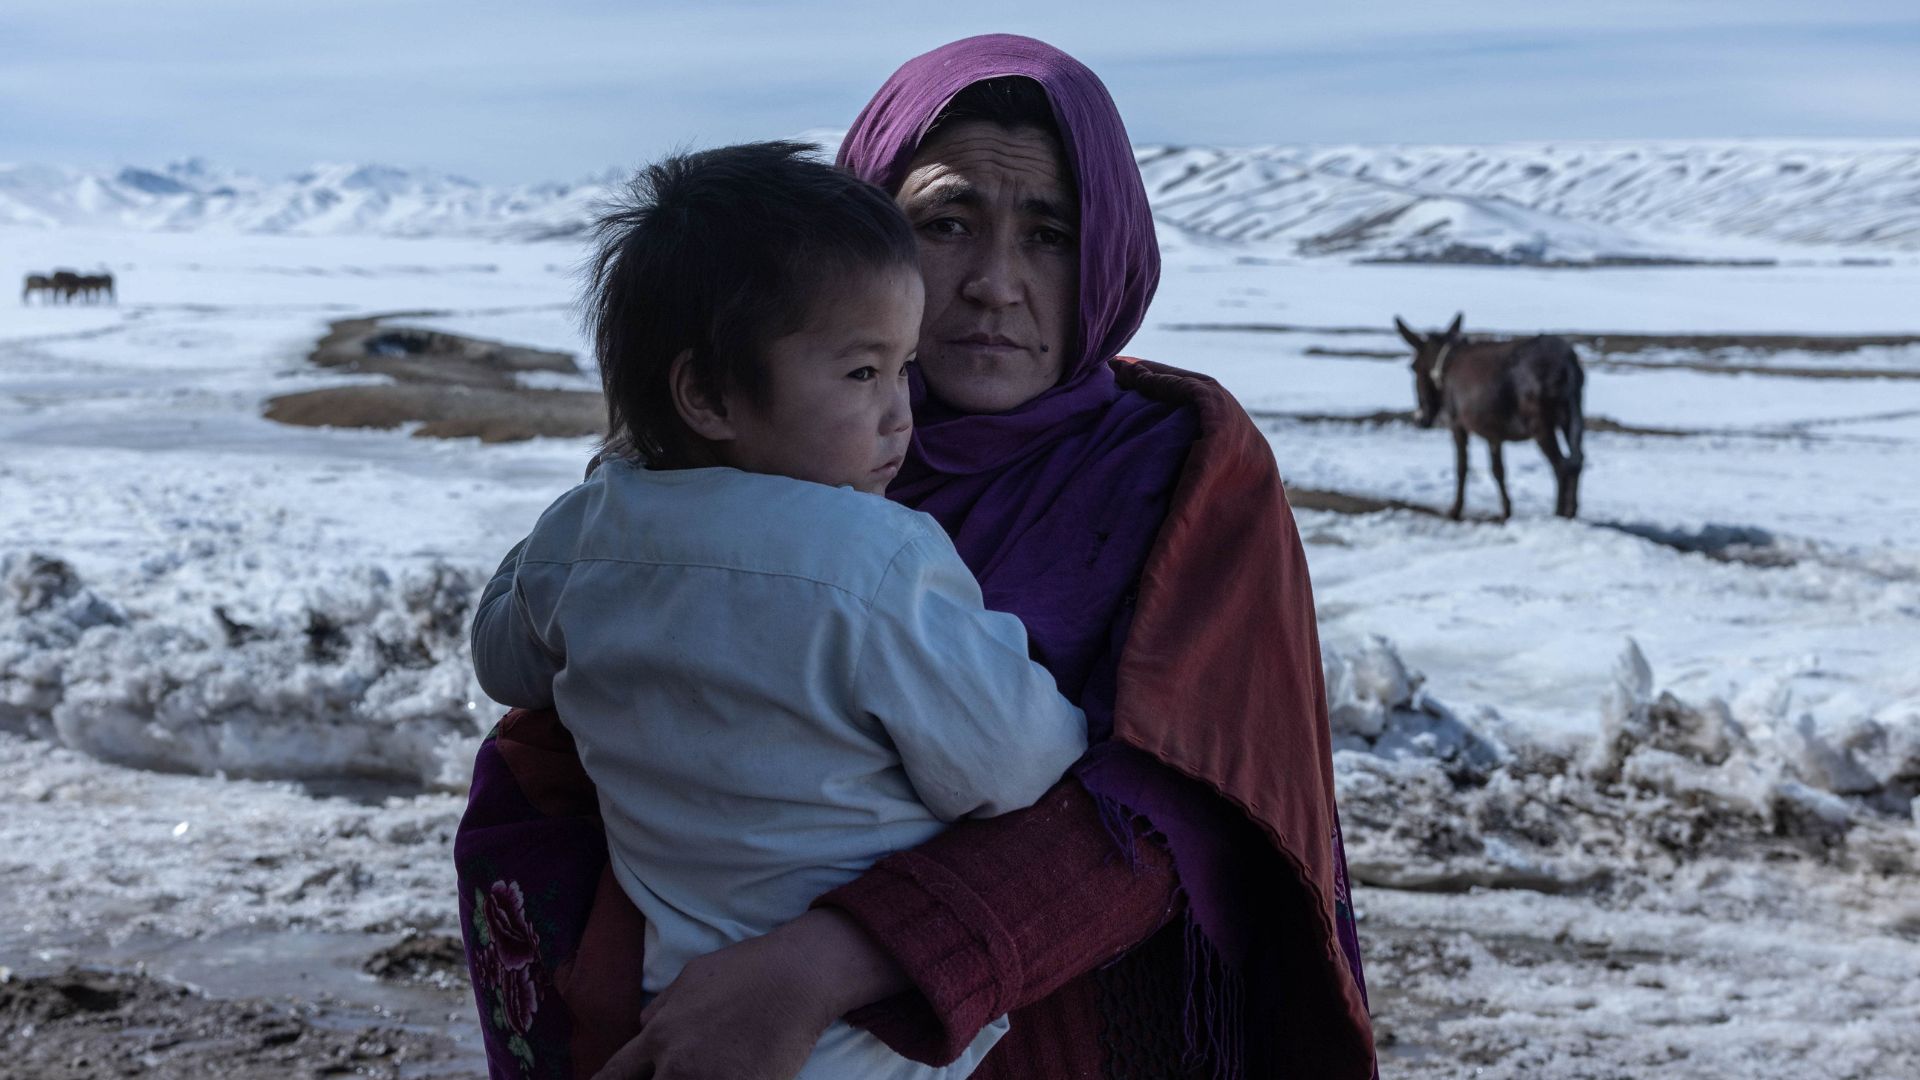 Donna afghana con bambino nel gelo invernale